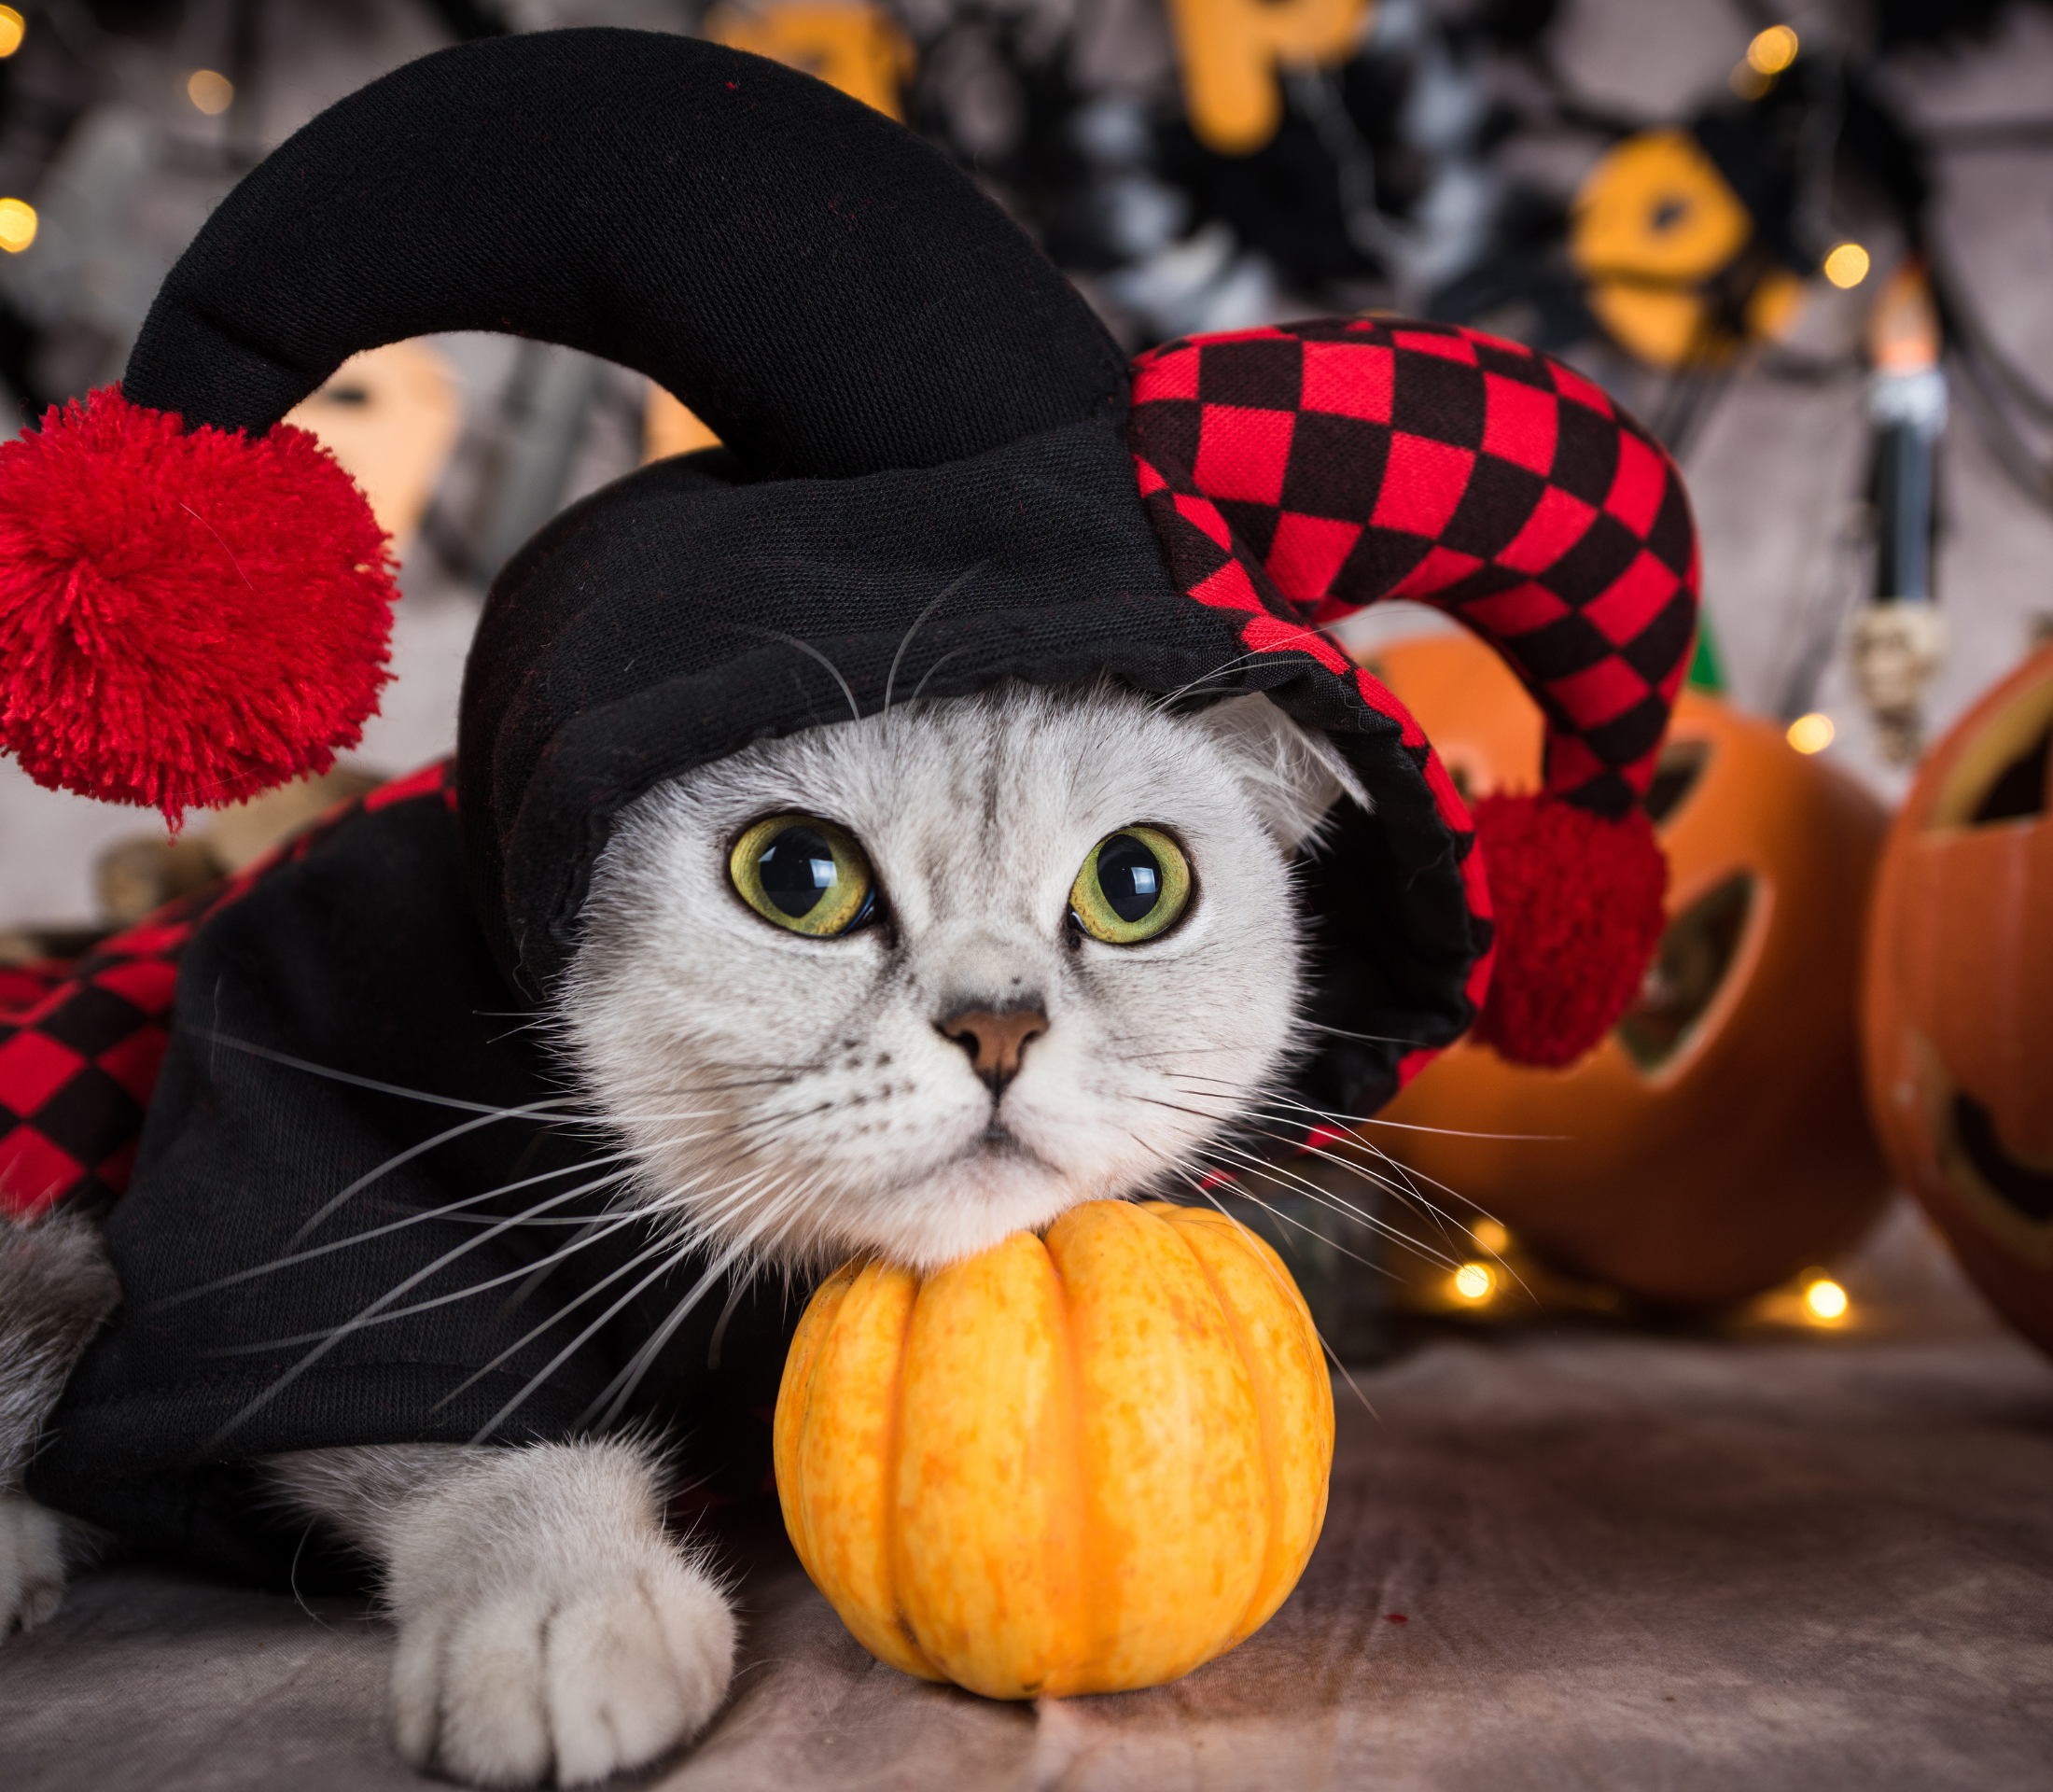 Kitten with joker hat costume and pumpkin